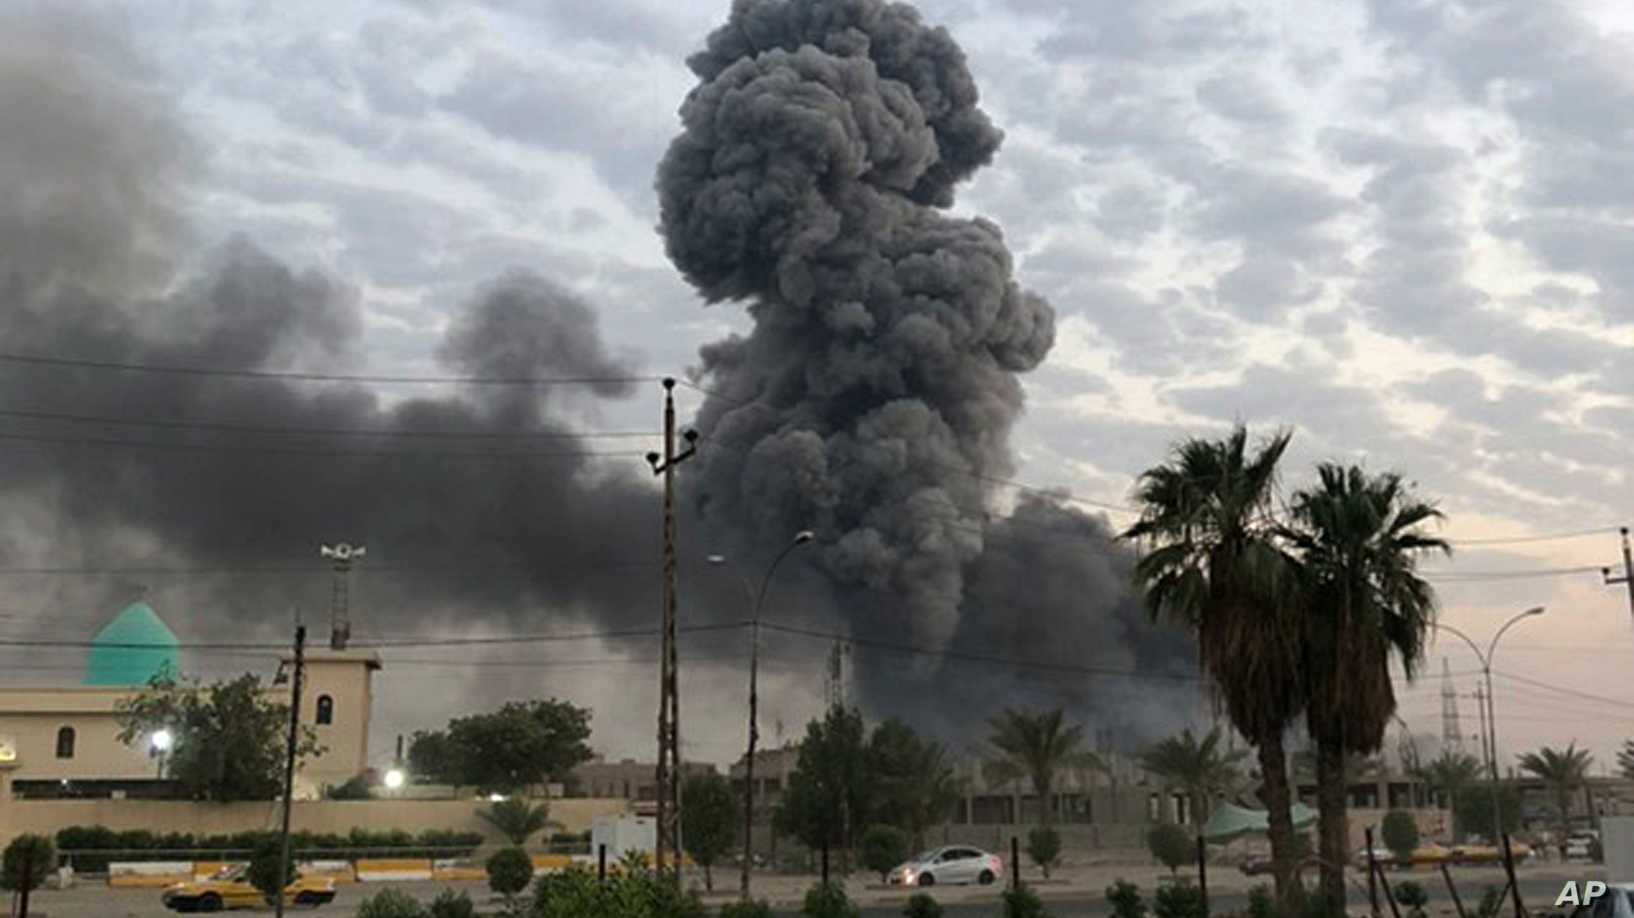 Weapons warehouse blasts frighten IraqisReport